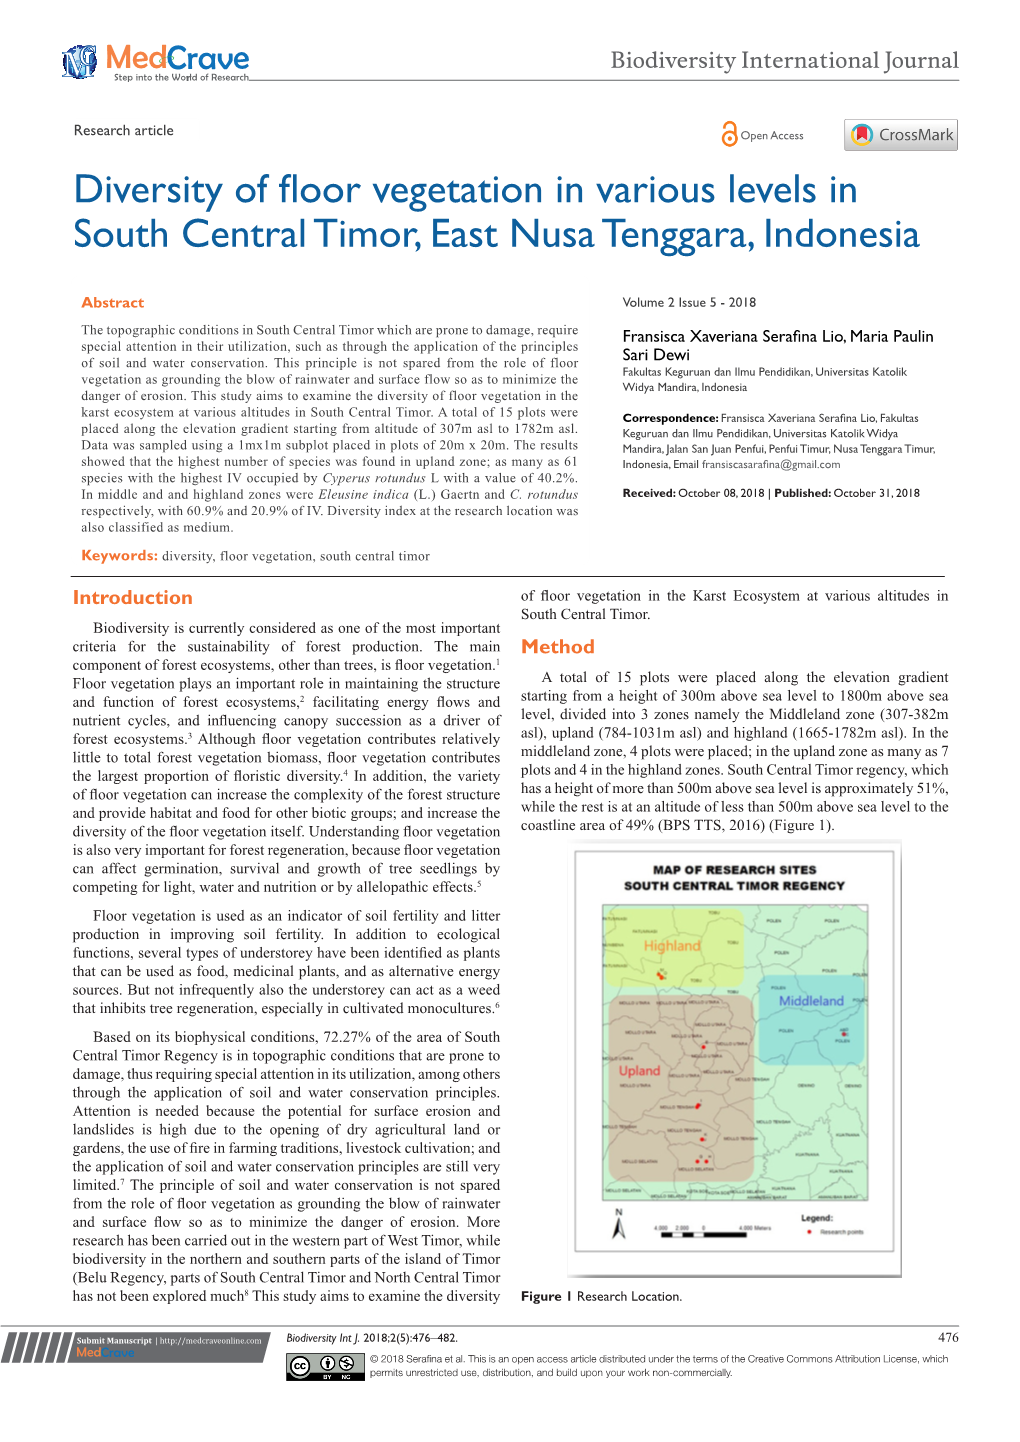 Diversity of Floor Vegetation in Various Levels in South Central Timor, East Nusa Tenggara, Indonesia